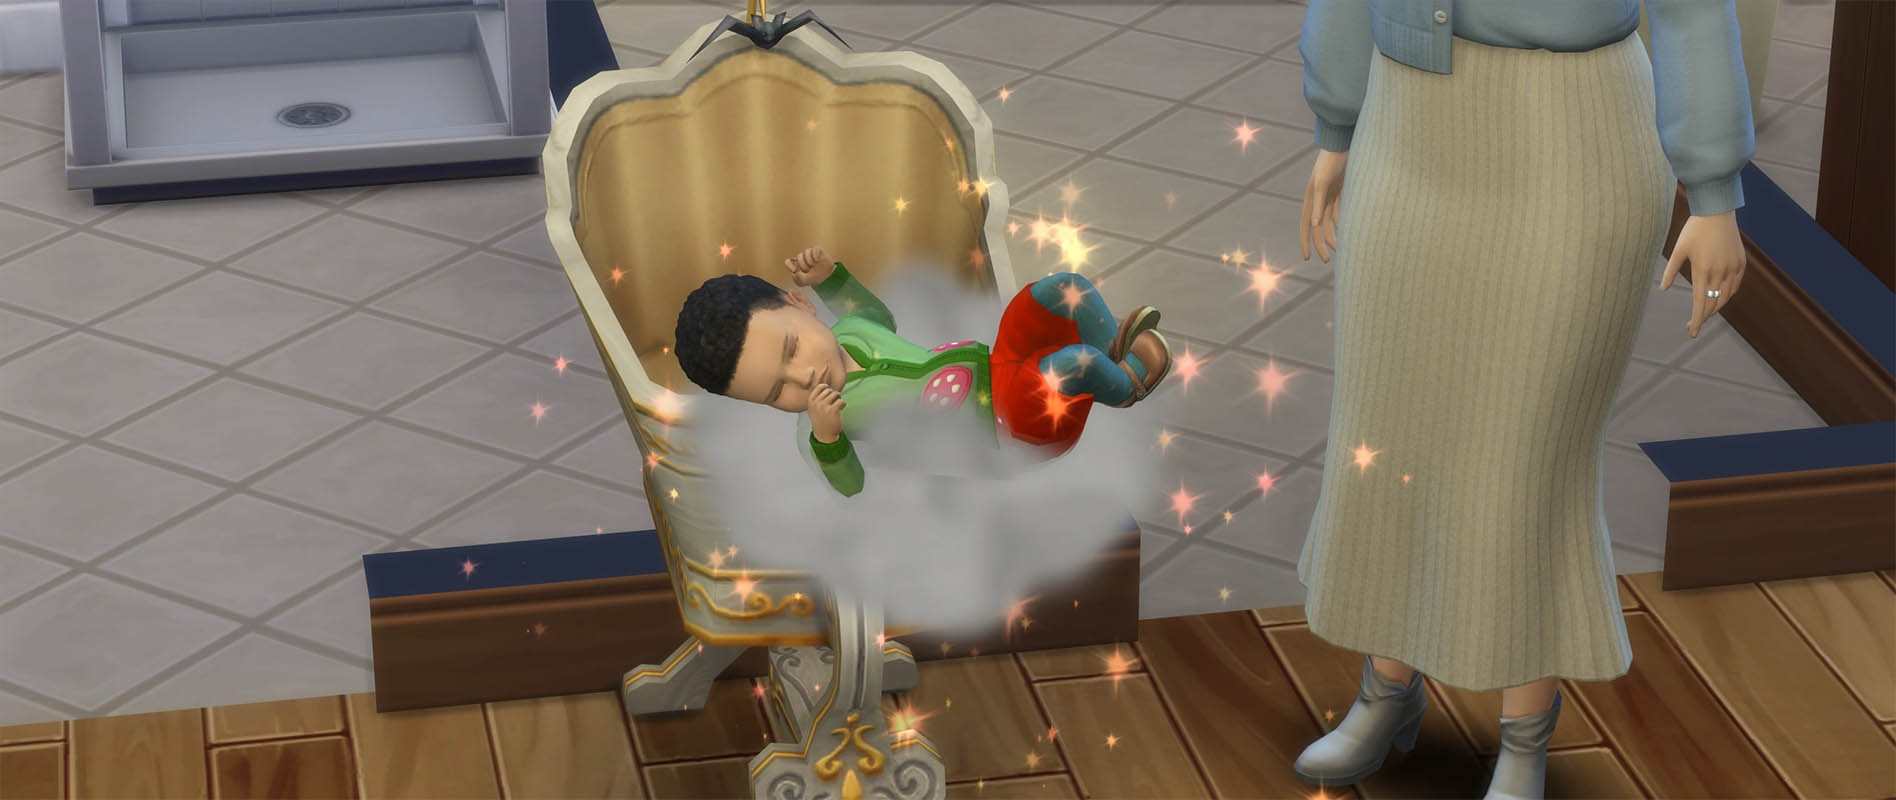 Для The Sims 4 вышел патч 1.96.365.1030, посвященный младенцам